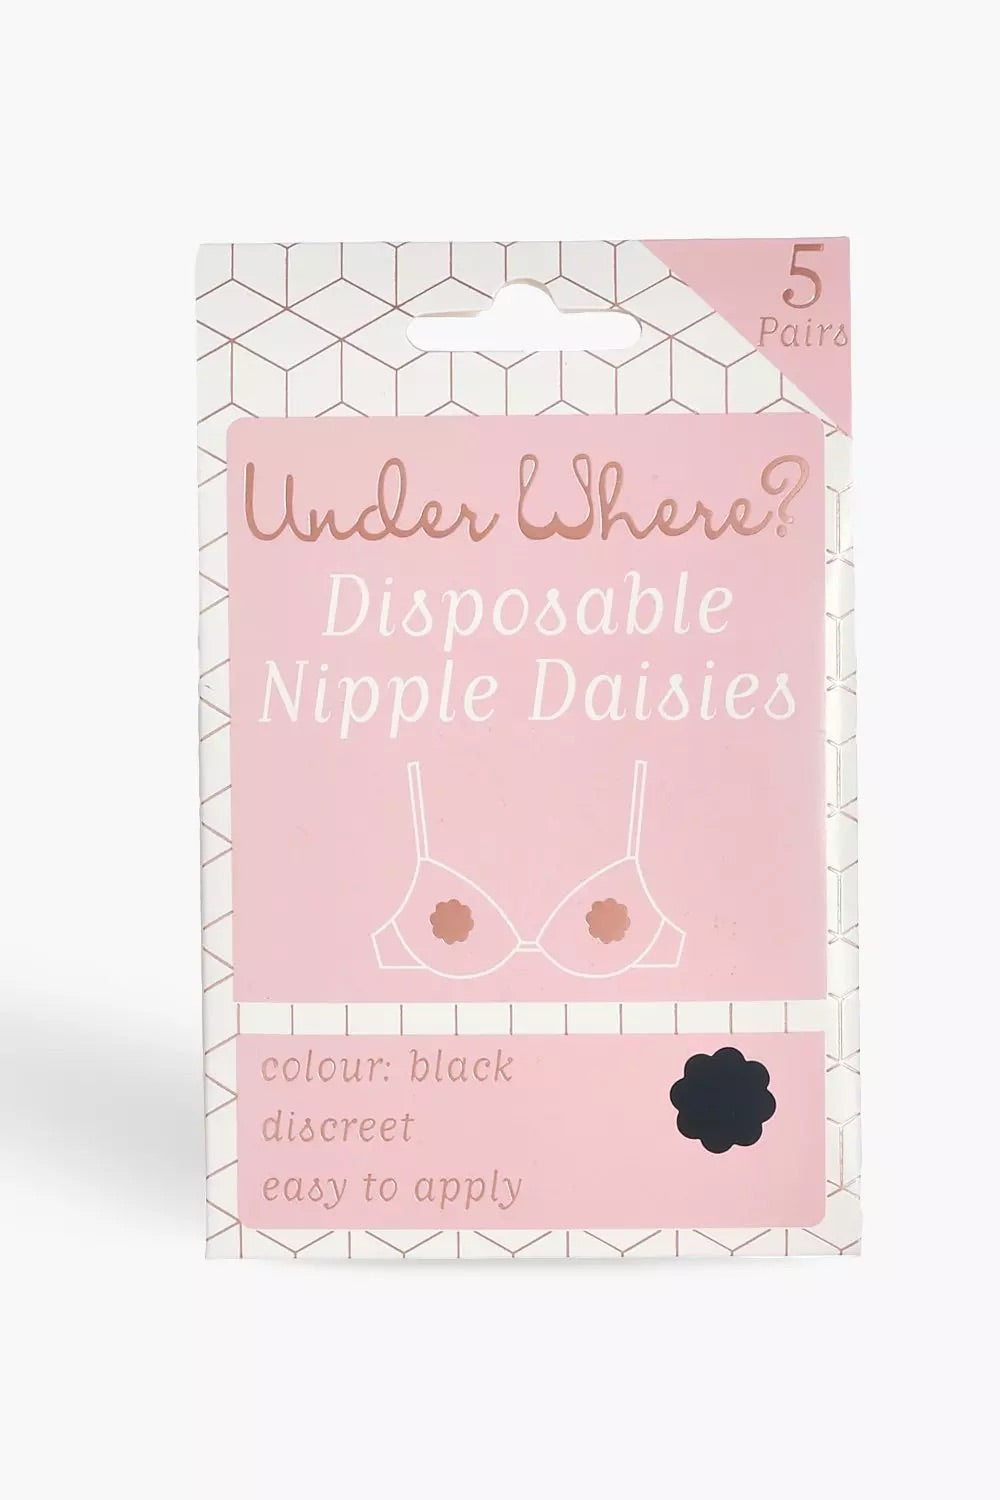 Under where, nipple daisy covers -  Black ( 5 pairs )